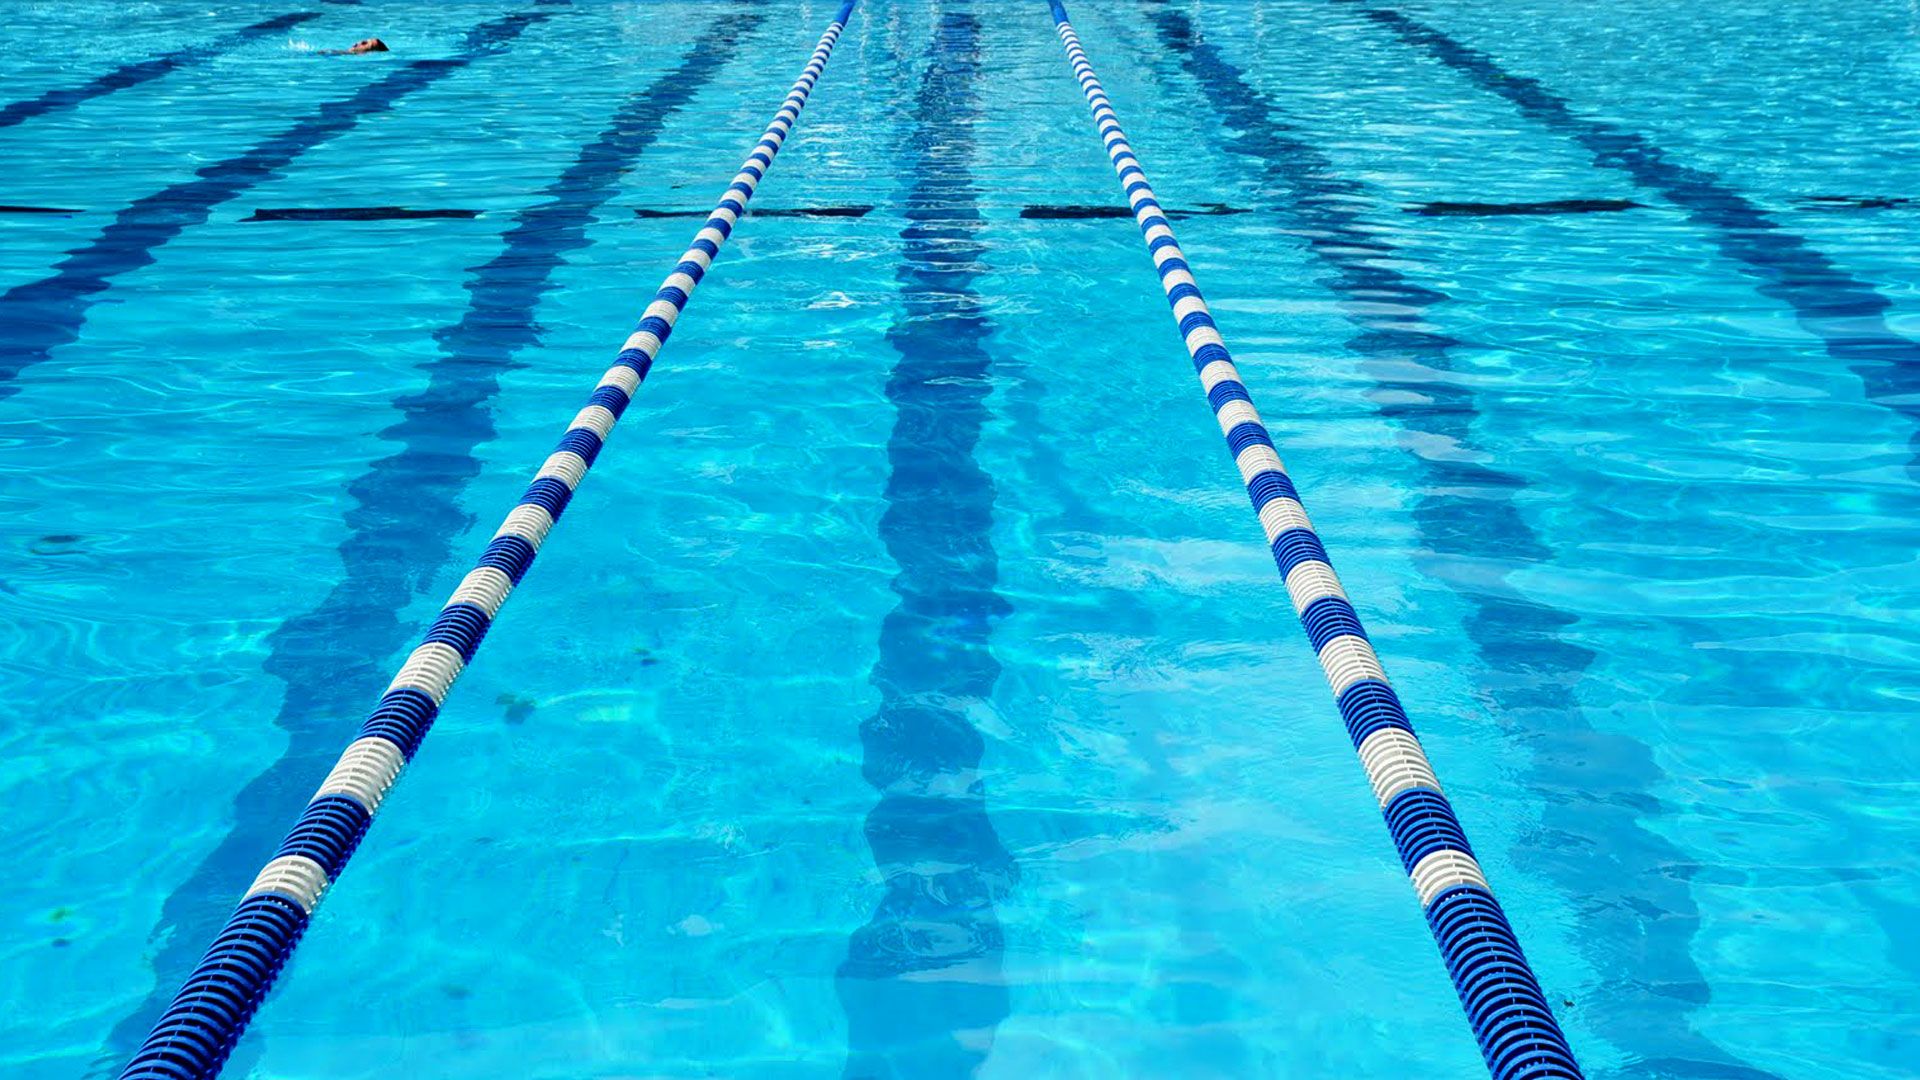 1920x1080 Olympic Swimming Pool Wallpaper - Olympic Swimming Pool Backgroun...